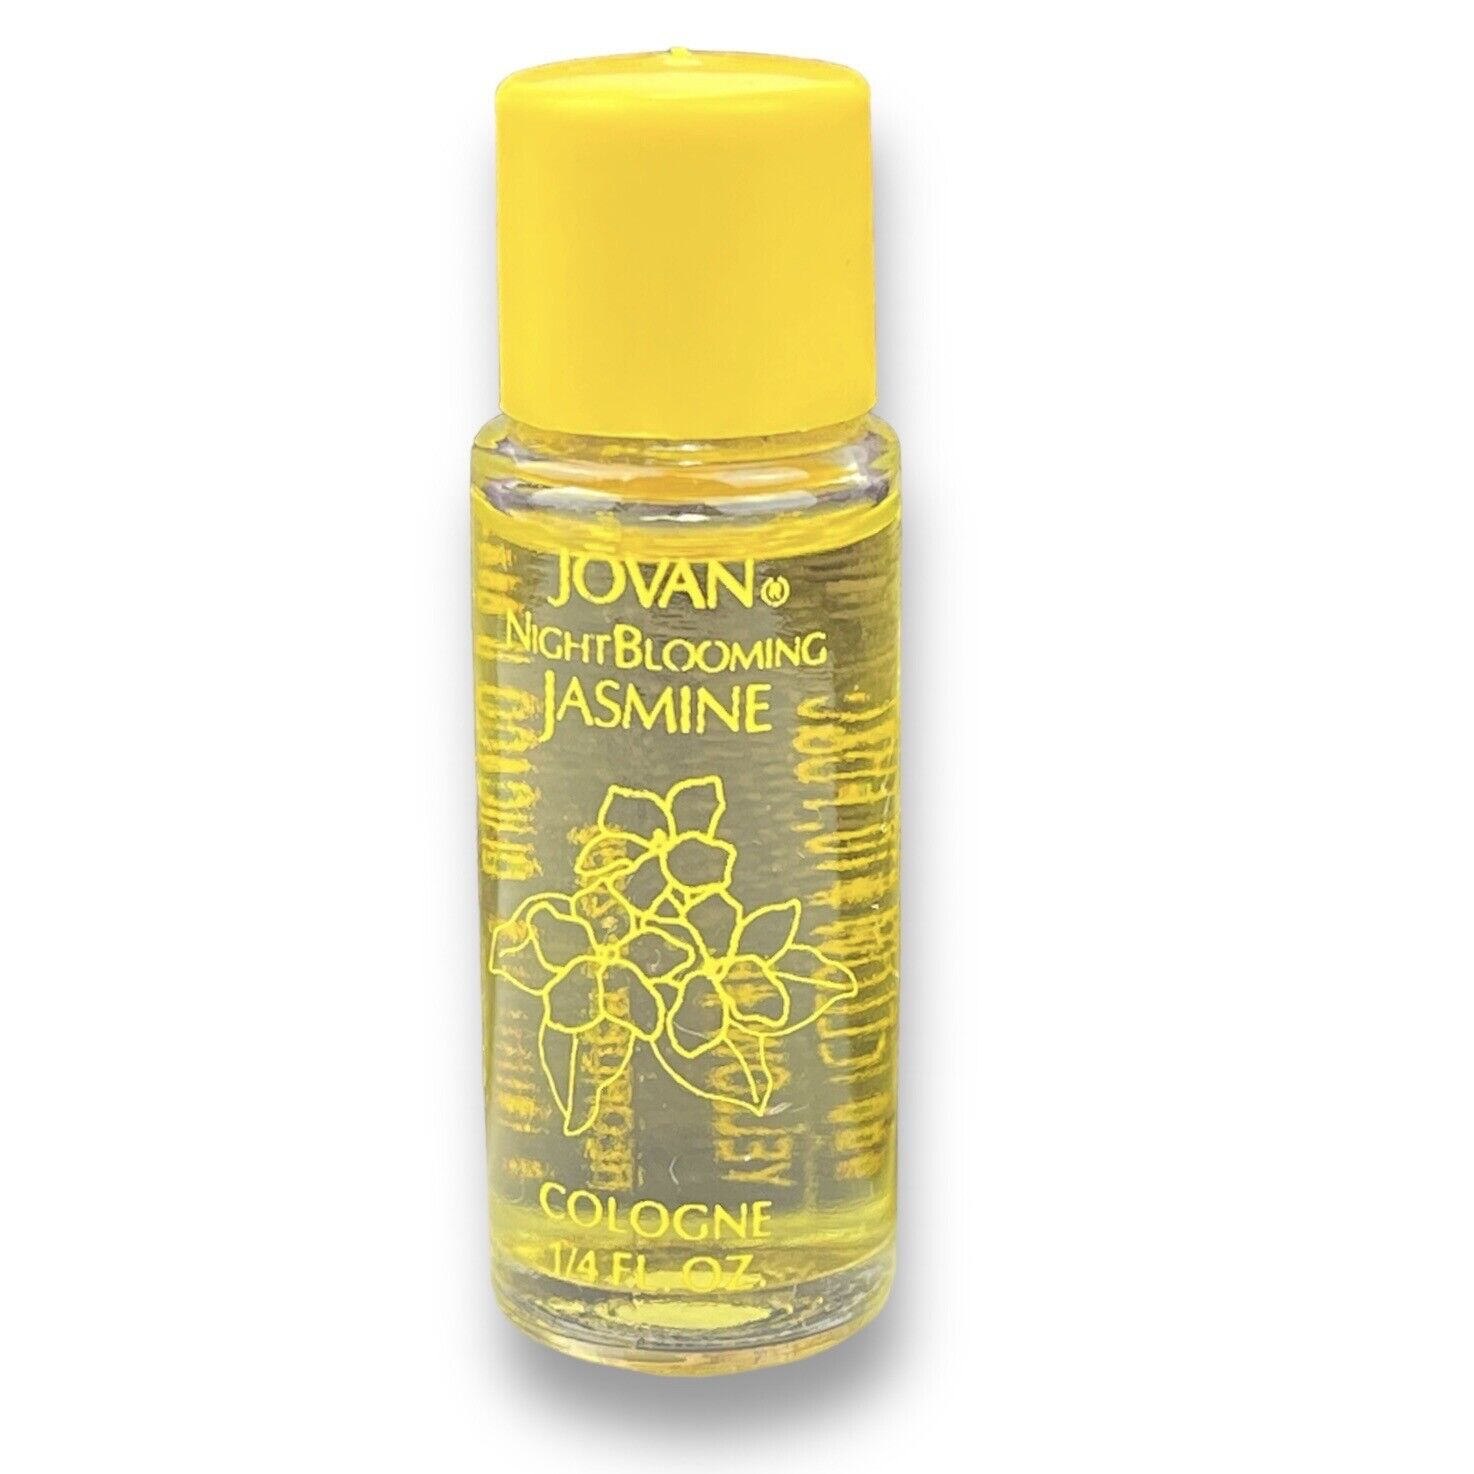 Jovan Night Blooming Jasmine Cologne Vtg .25oz Yellow Cap